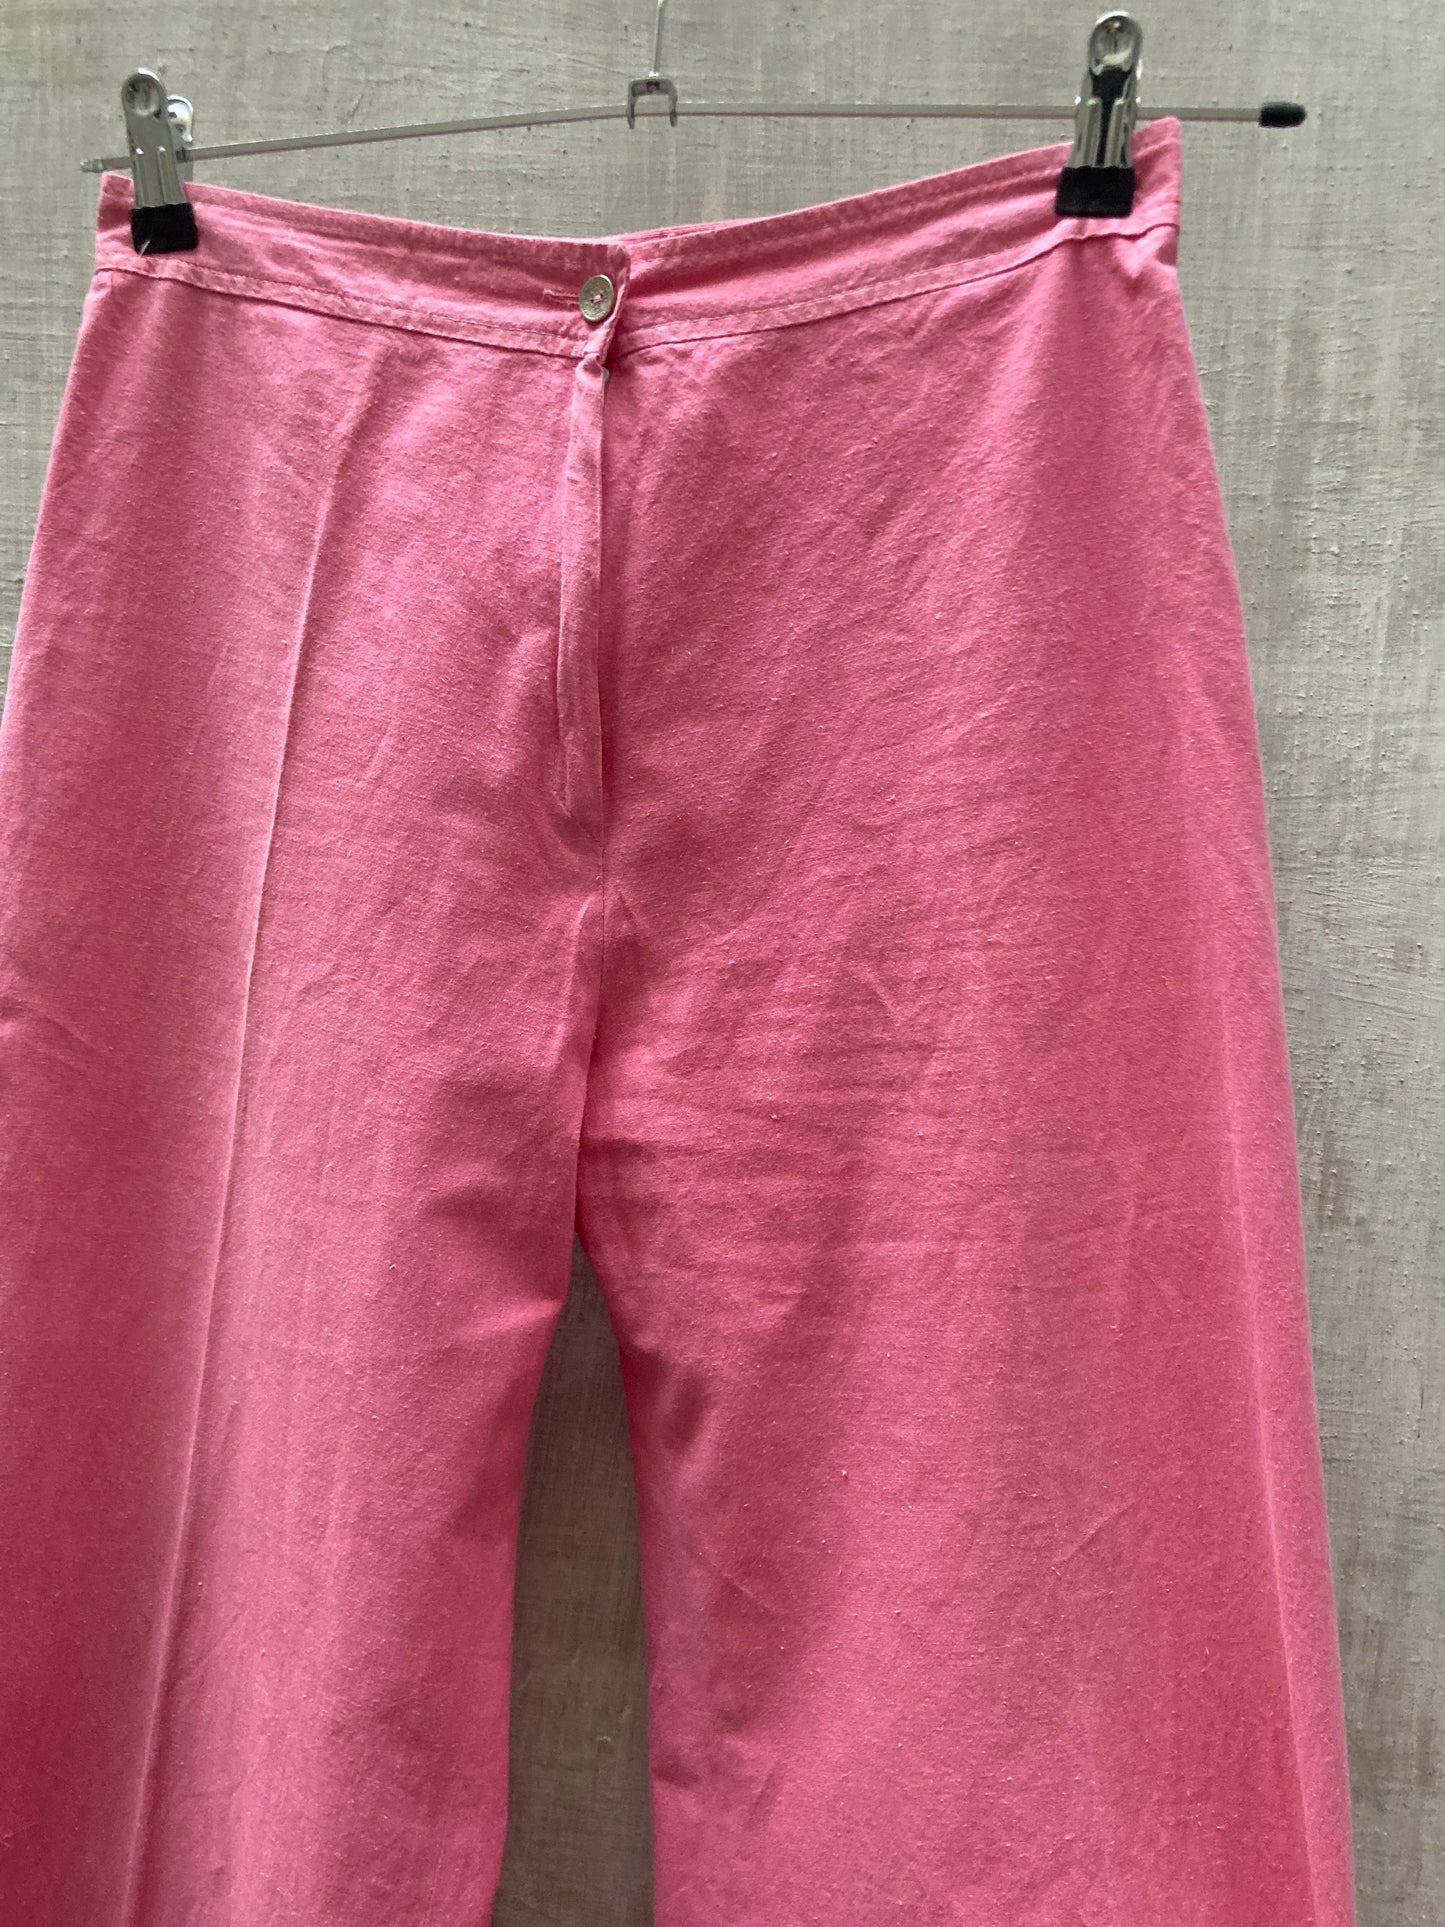 Pantalon flare rose 1970